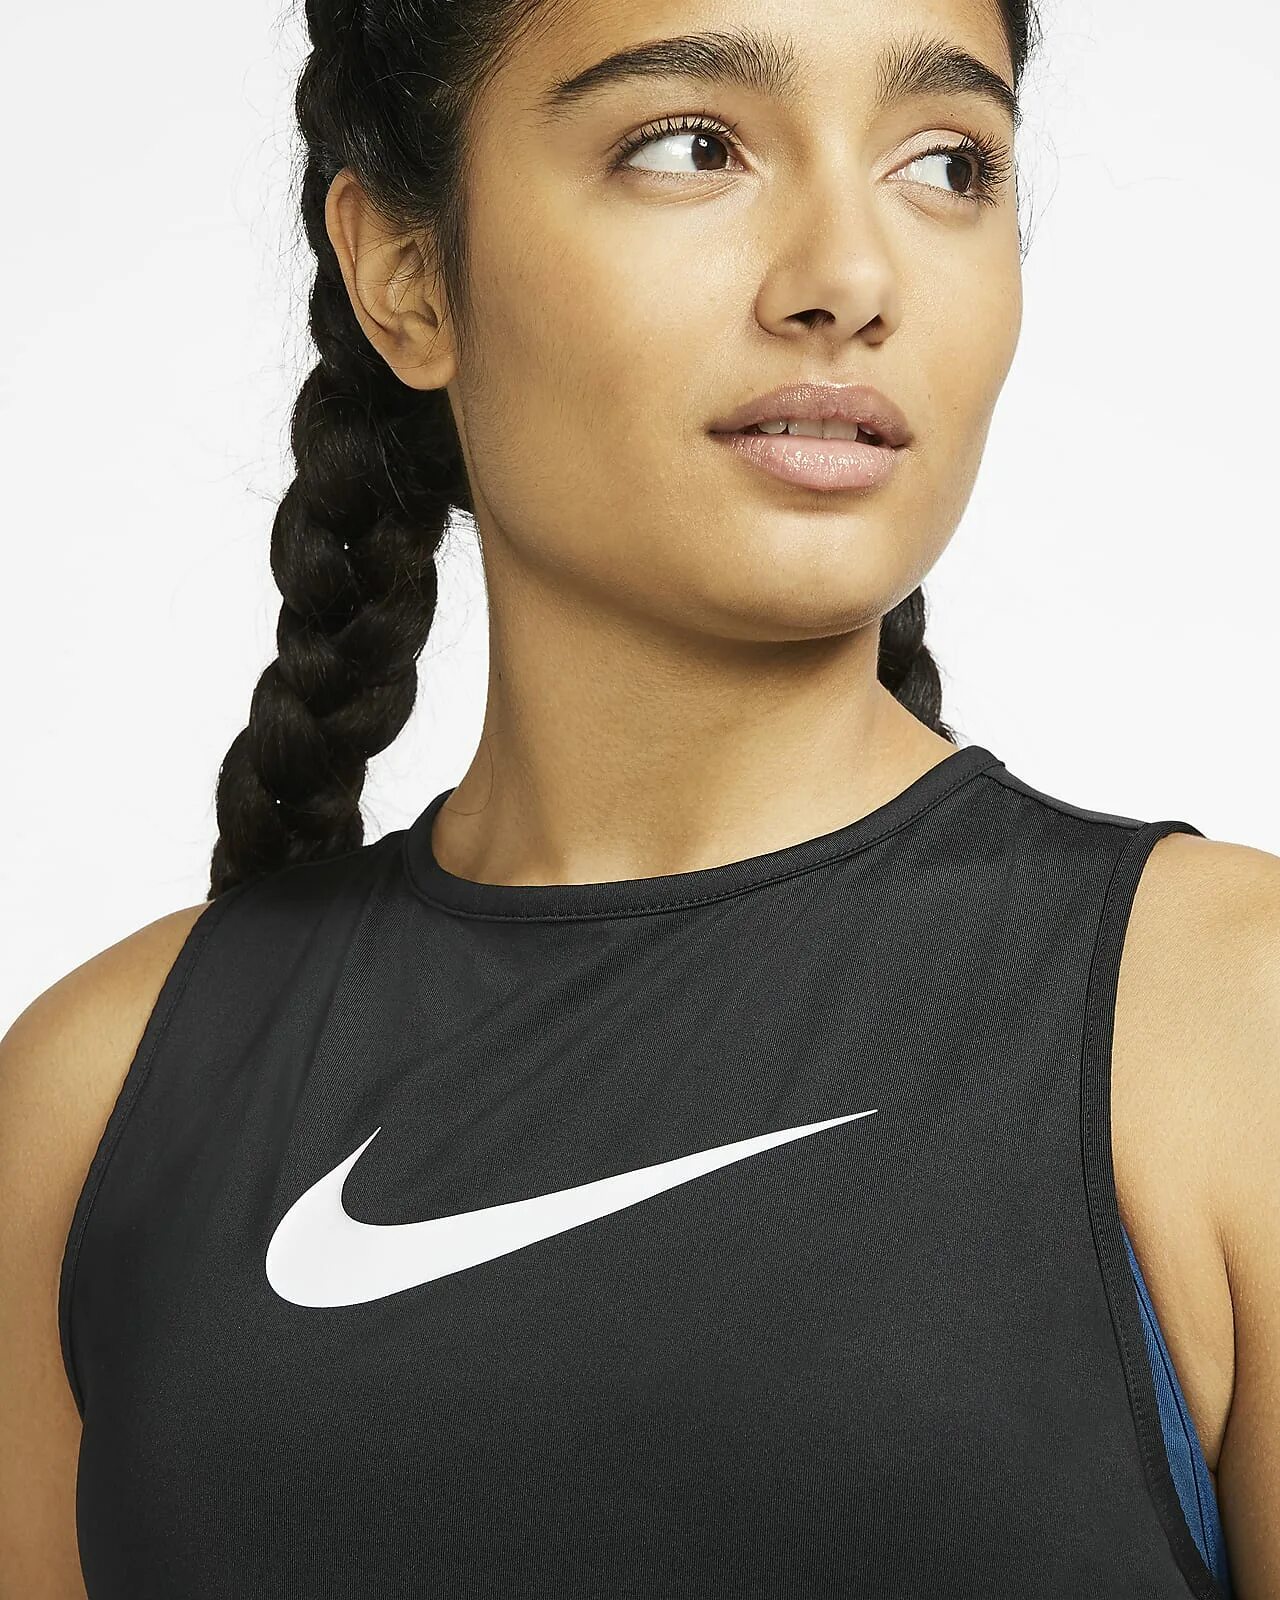 Топик найк. Nike Pro женские. Топ найк женский. Топ Nike Pro. Nike Dri Fit топ женский.